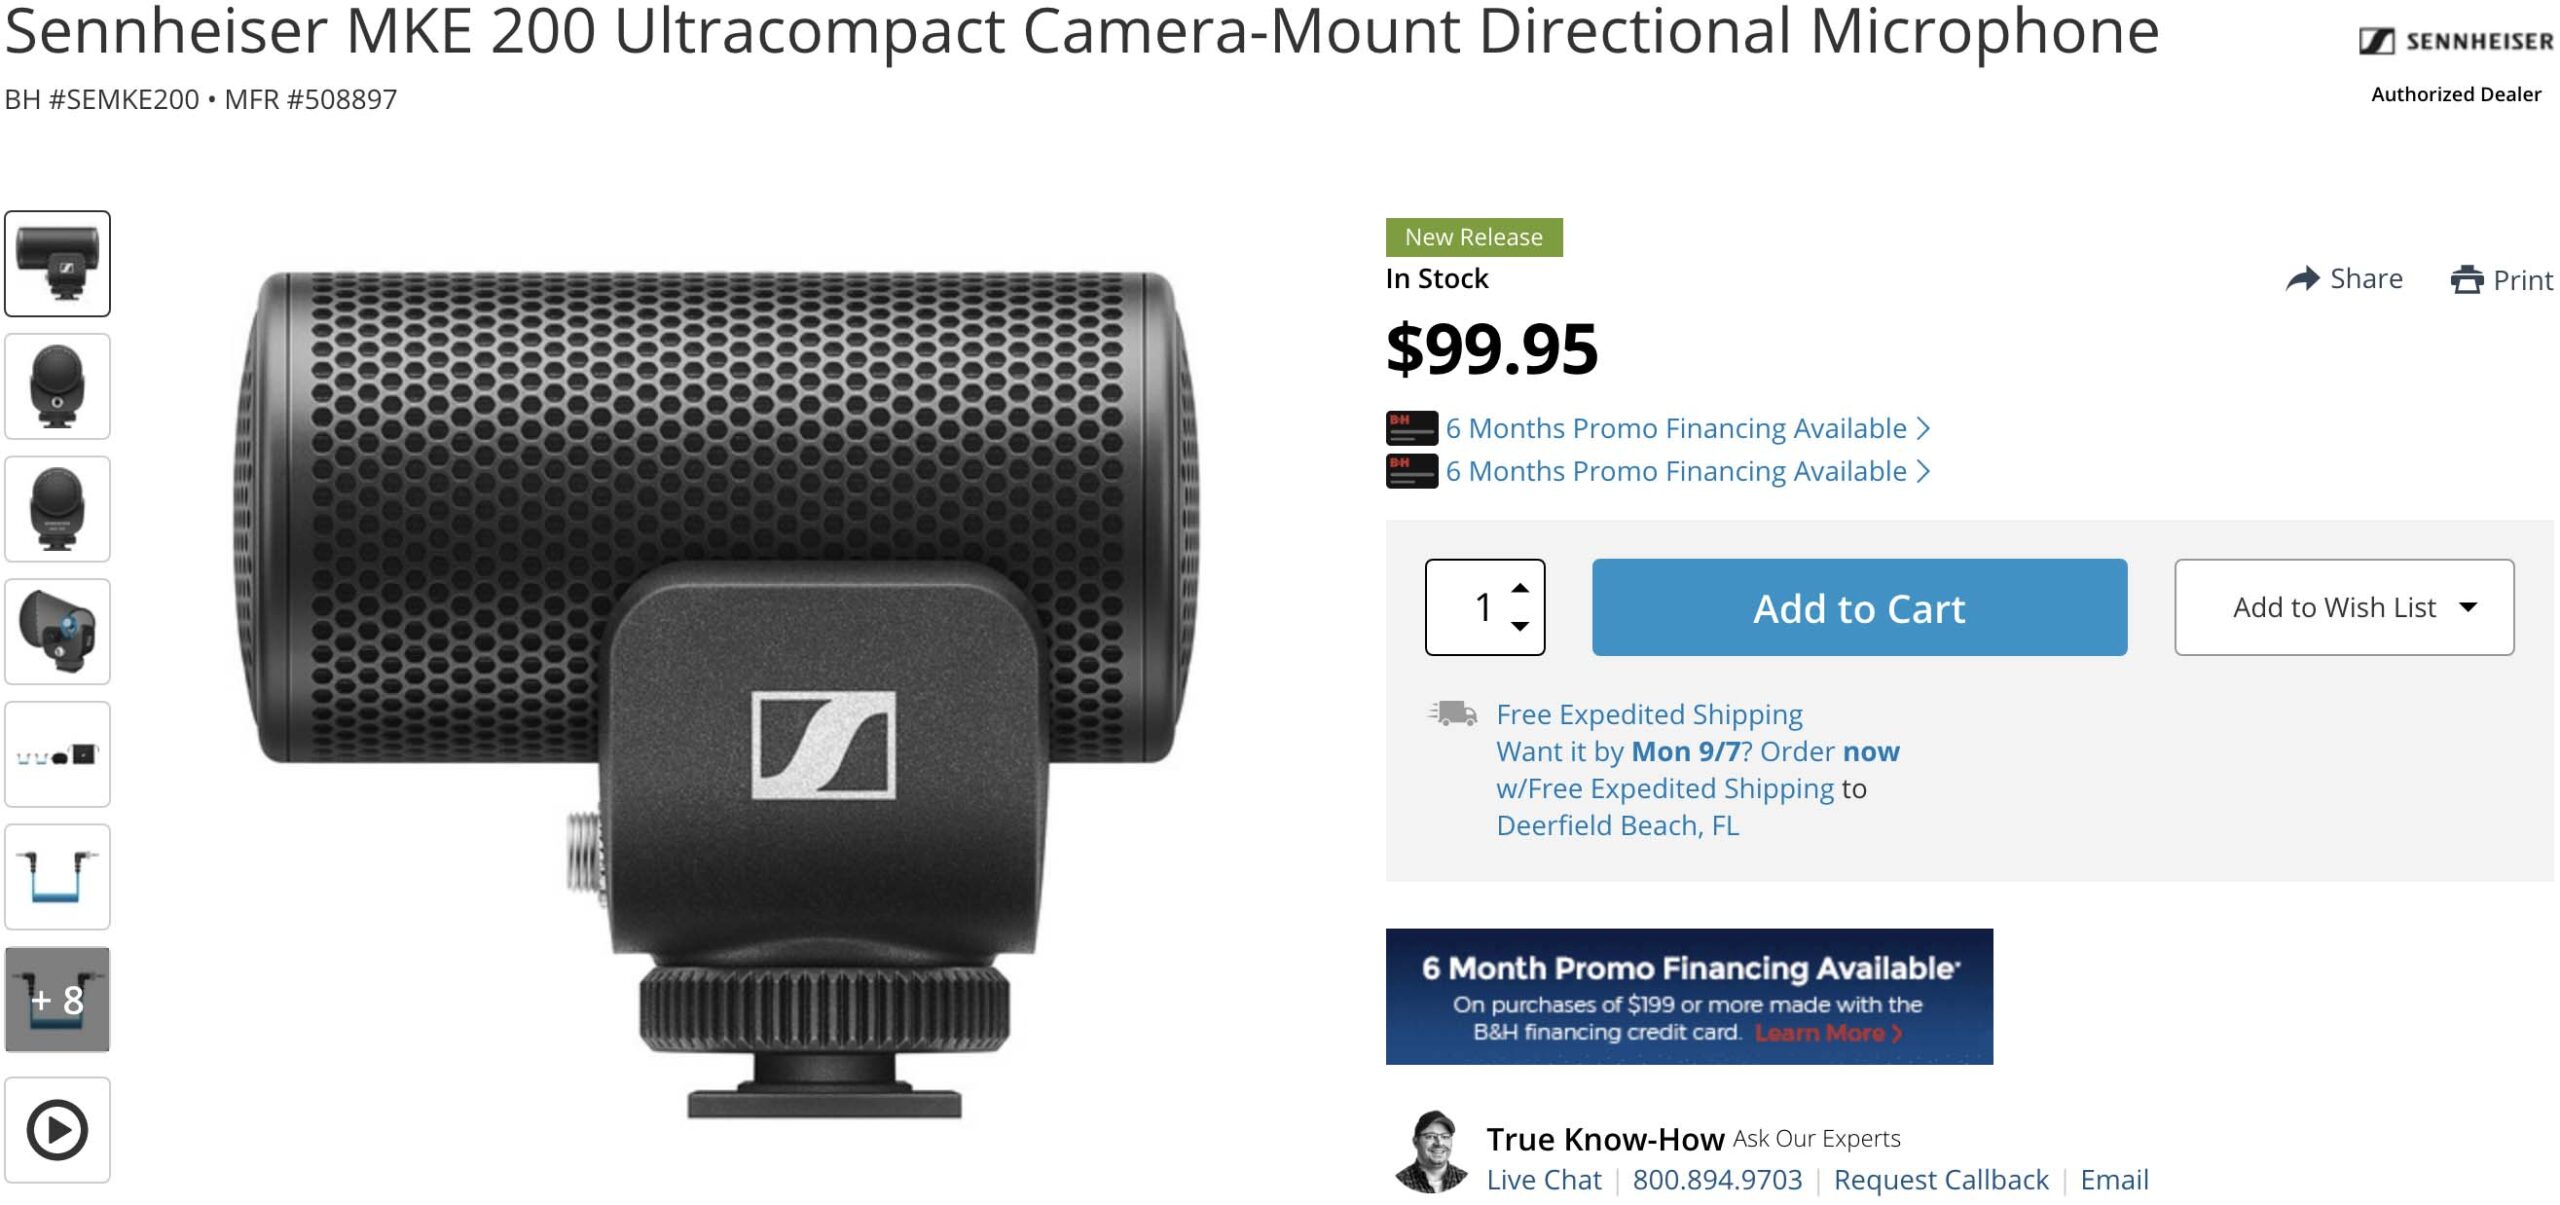 New Sennheiser MKE 200 Ultracompact Camera-Mount Directional